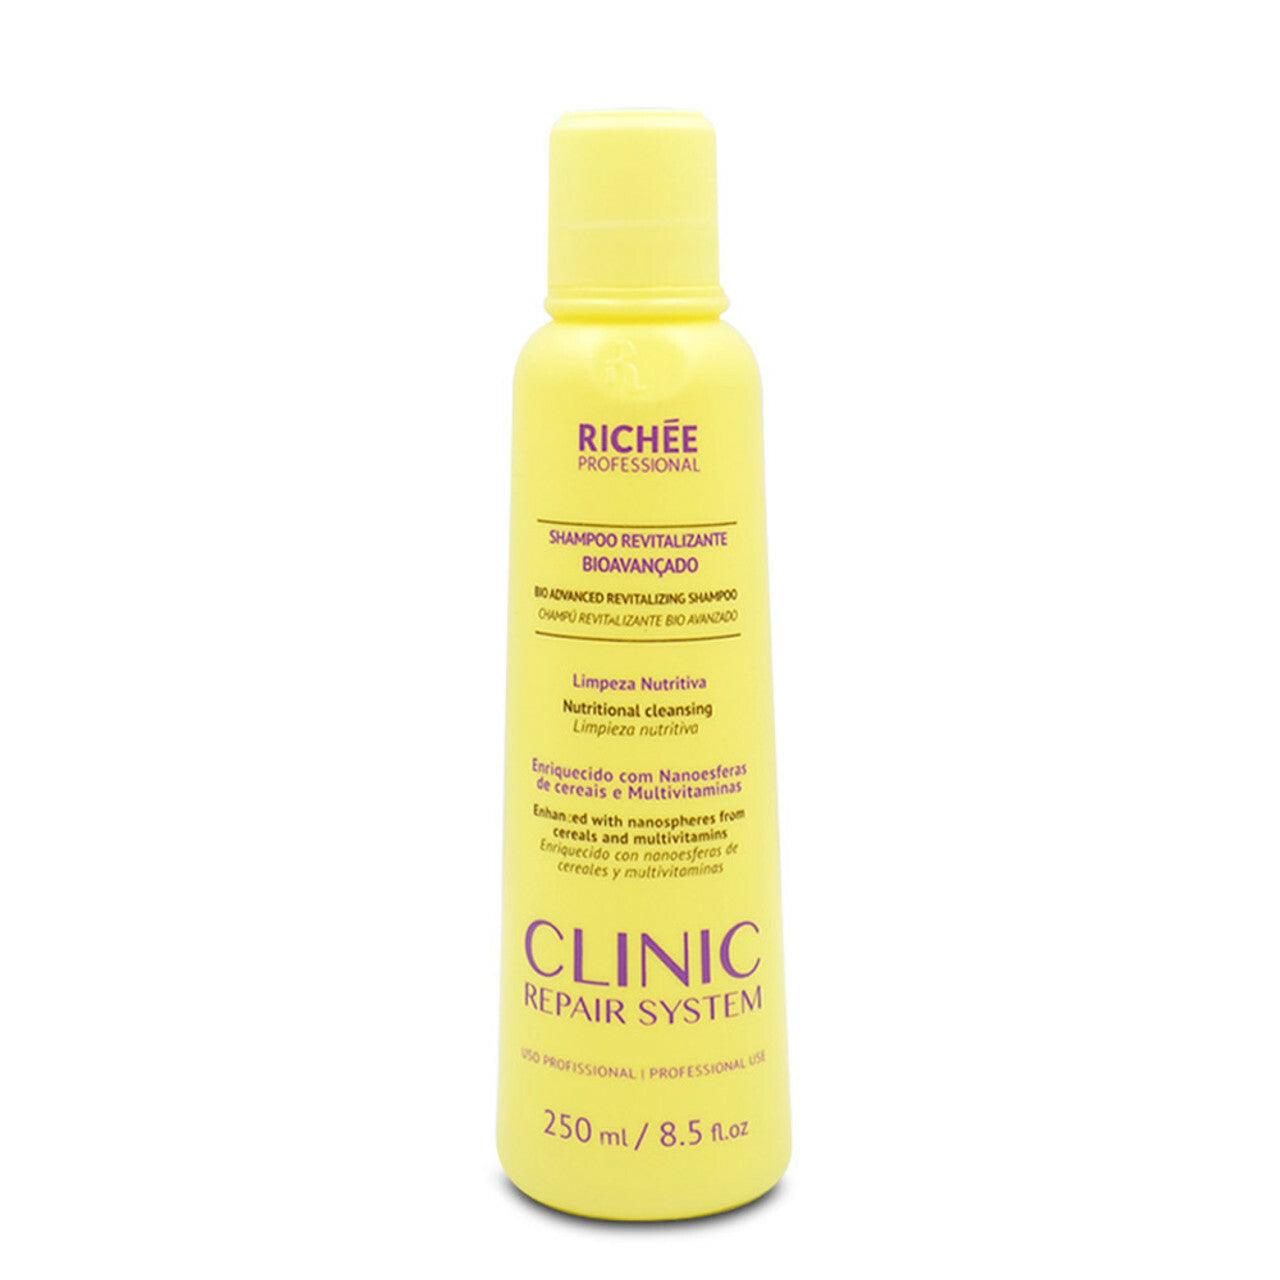 Richee, Clinic Repair System Revitalizante Bioavançado, Deep Cleansing Shampoo For Hair 250ml - BUY BRAZIL STORE